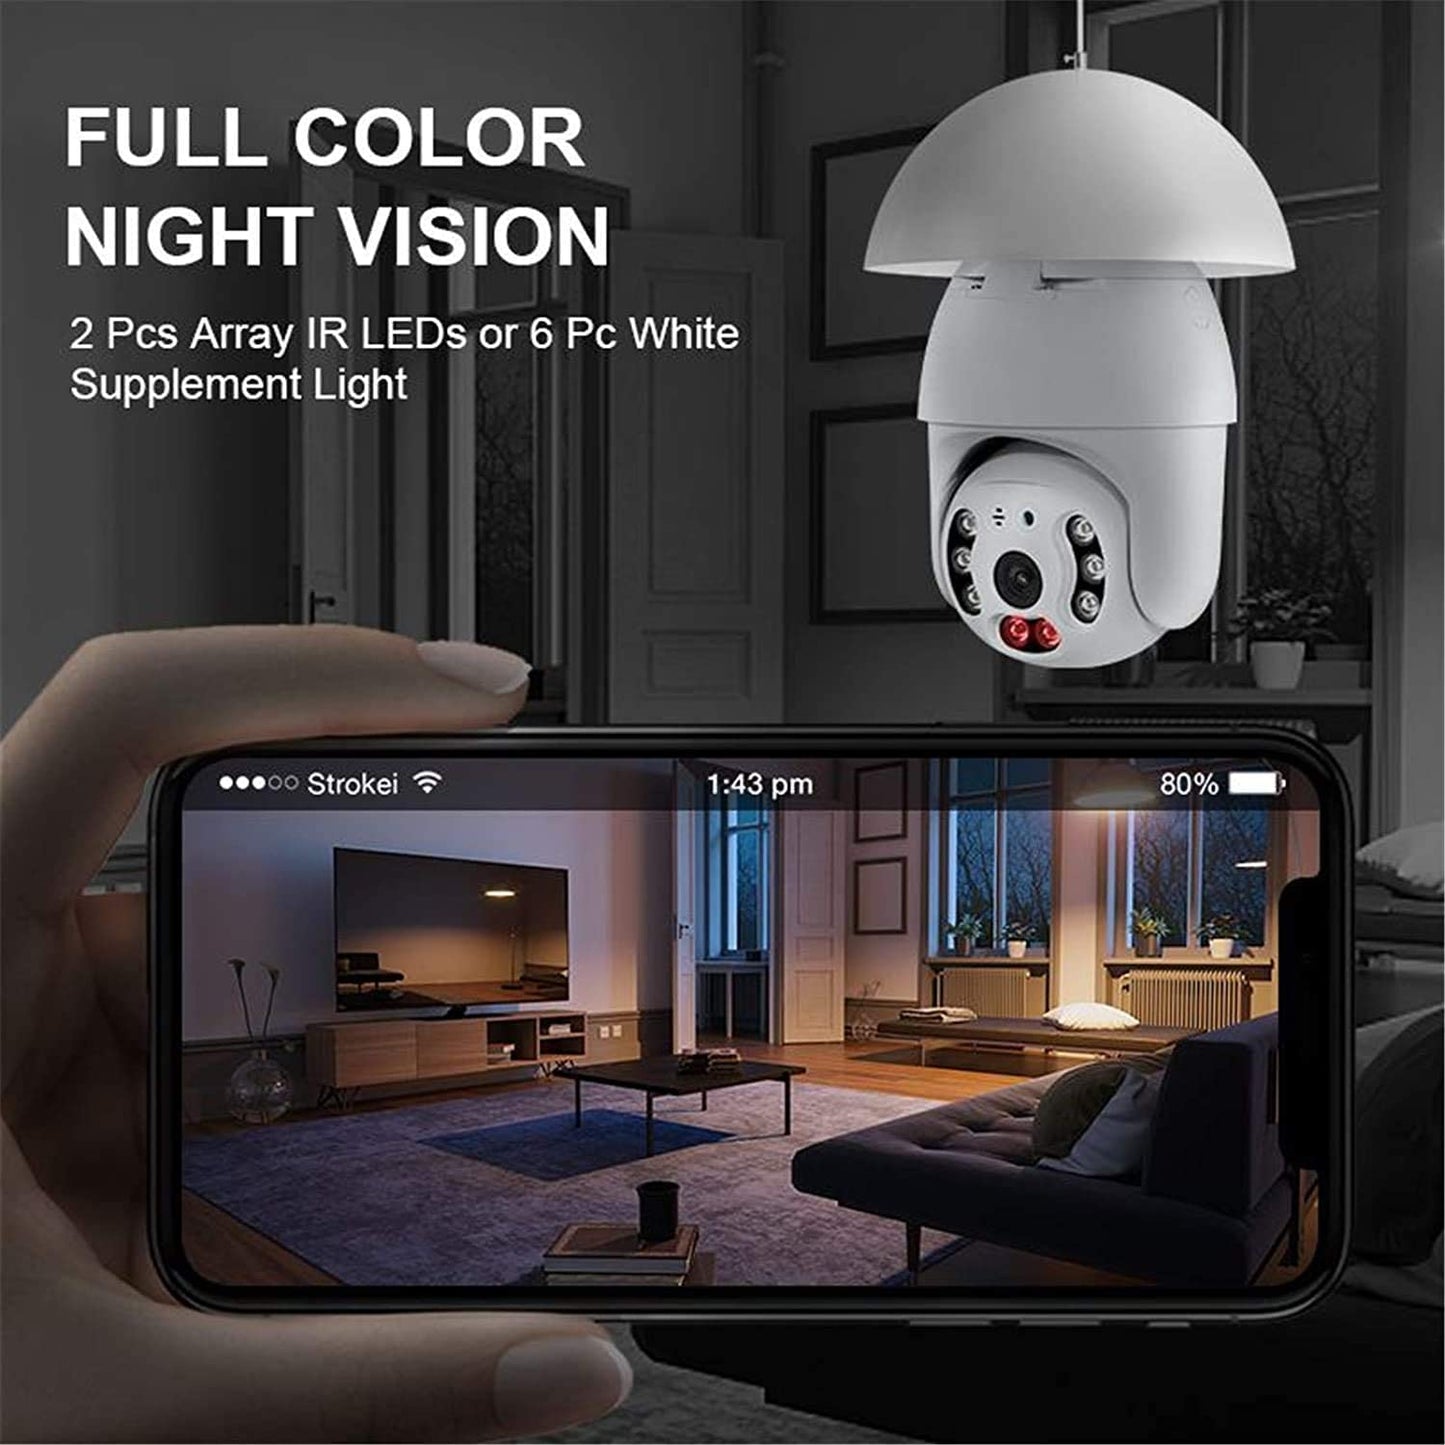 Tuya WiFi Bulb Camera 3MP PTZ Security Camera Lamp-Full Light Night Vision two Way Talk Auto Tracking CCTV Video Surveillanc